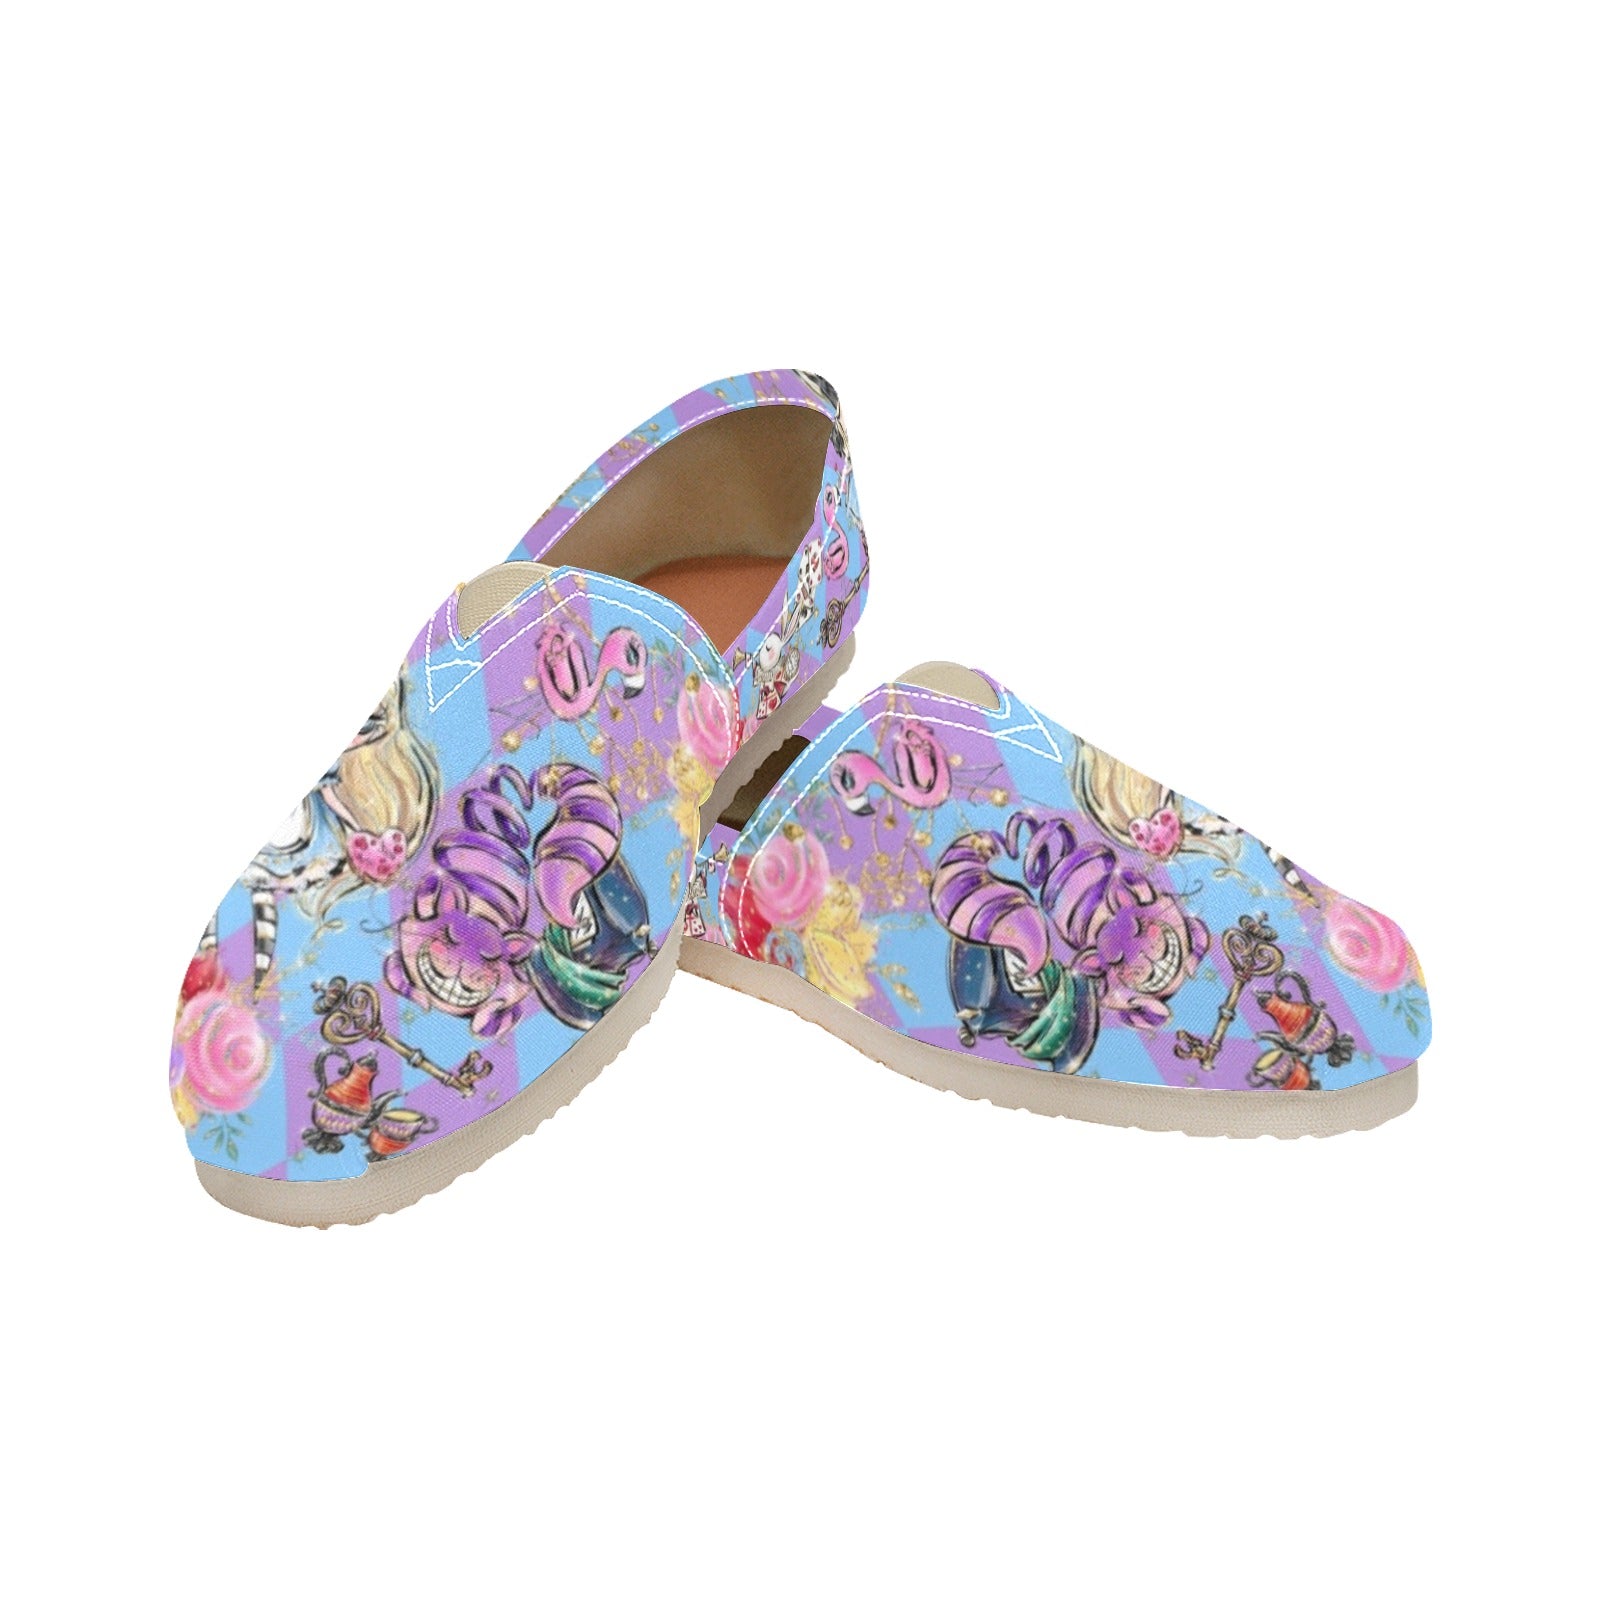 Wonderland - Casual Canvas Slip-on Shoes